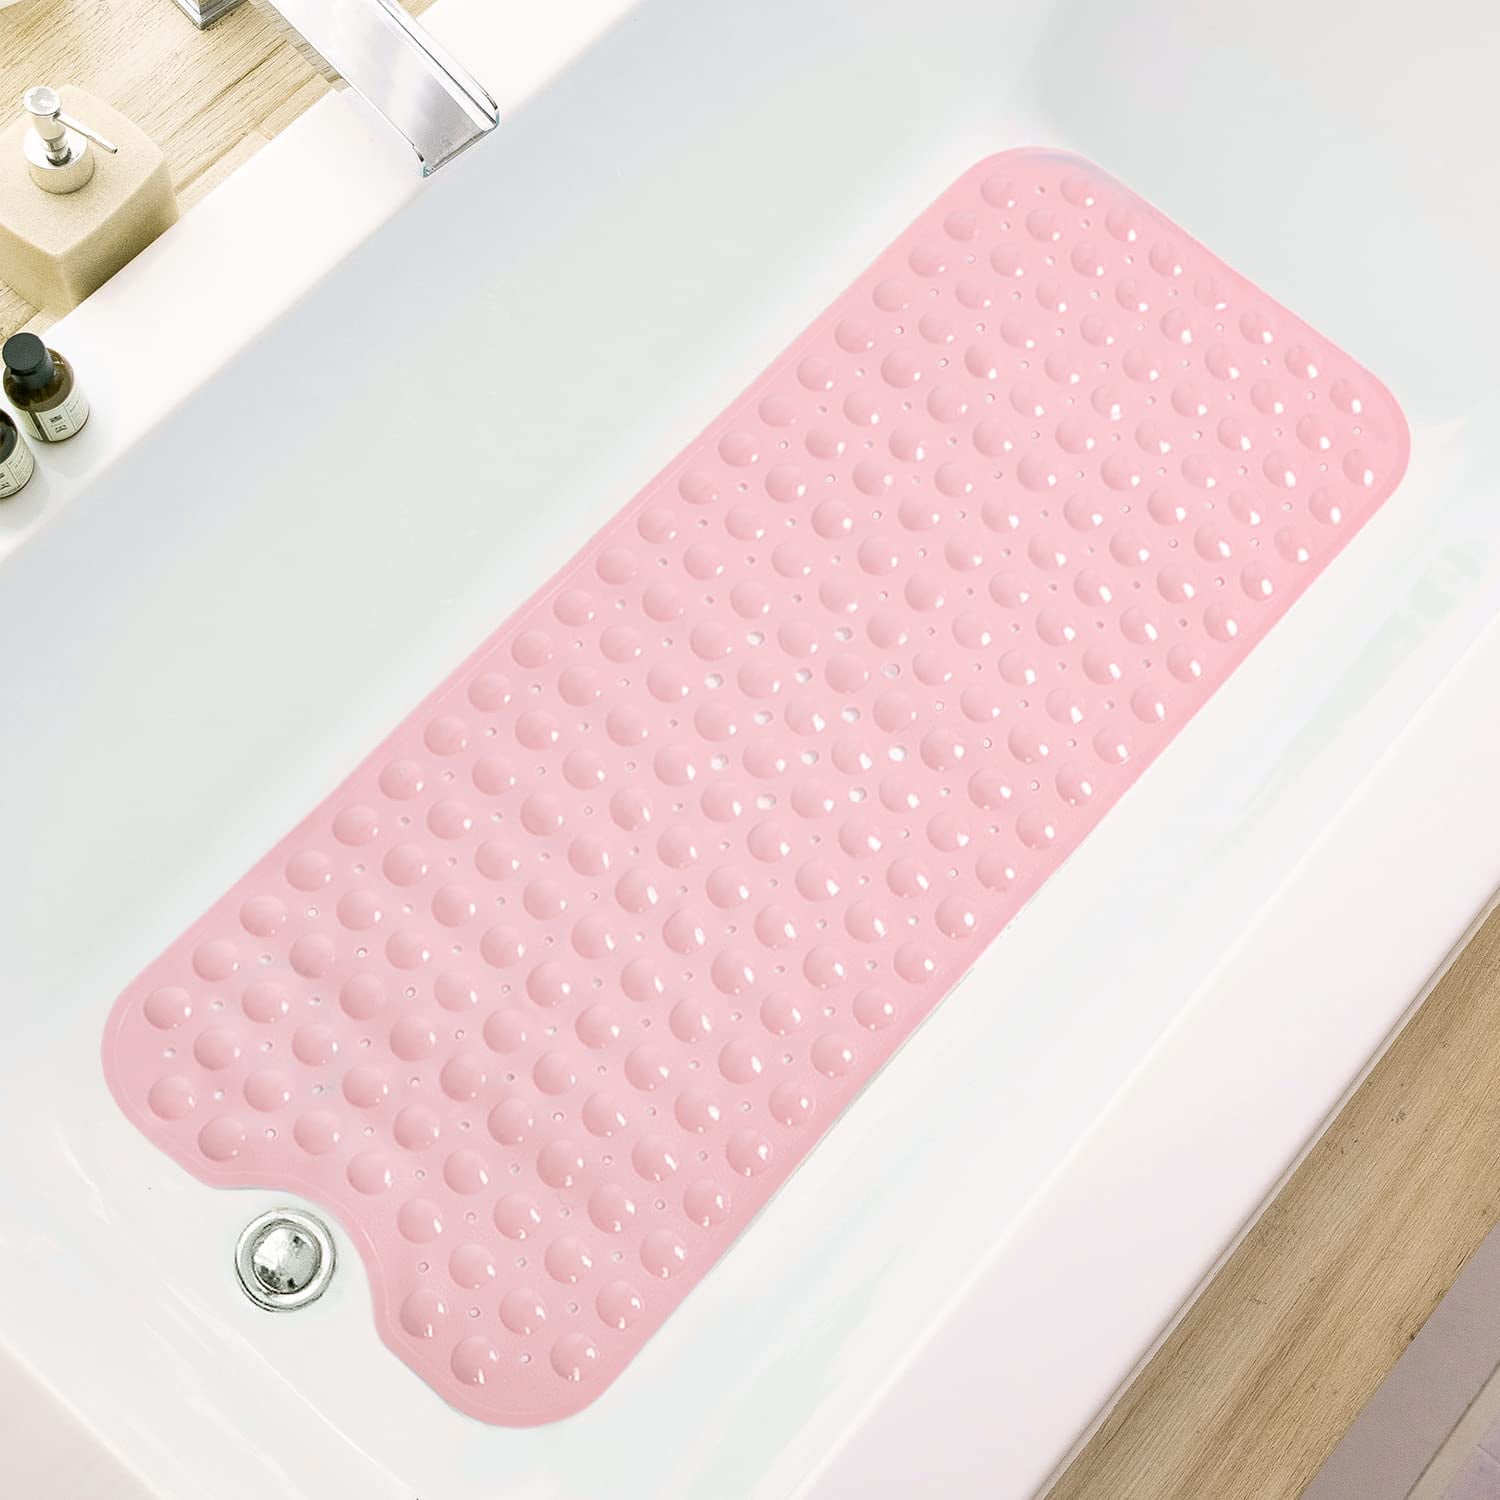 Non- Slip Hydro Bath Mat - Broadway Home Medical